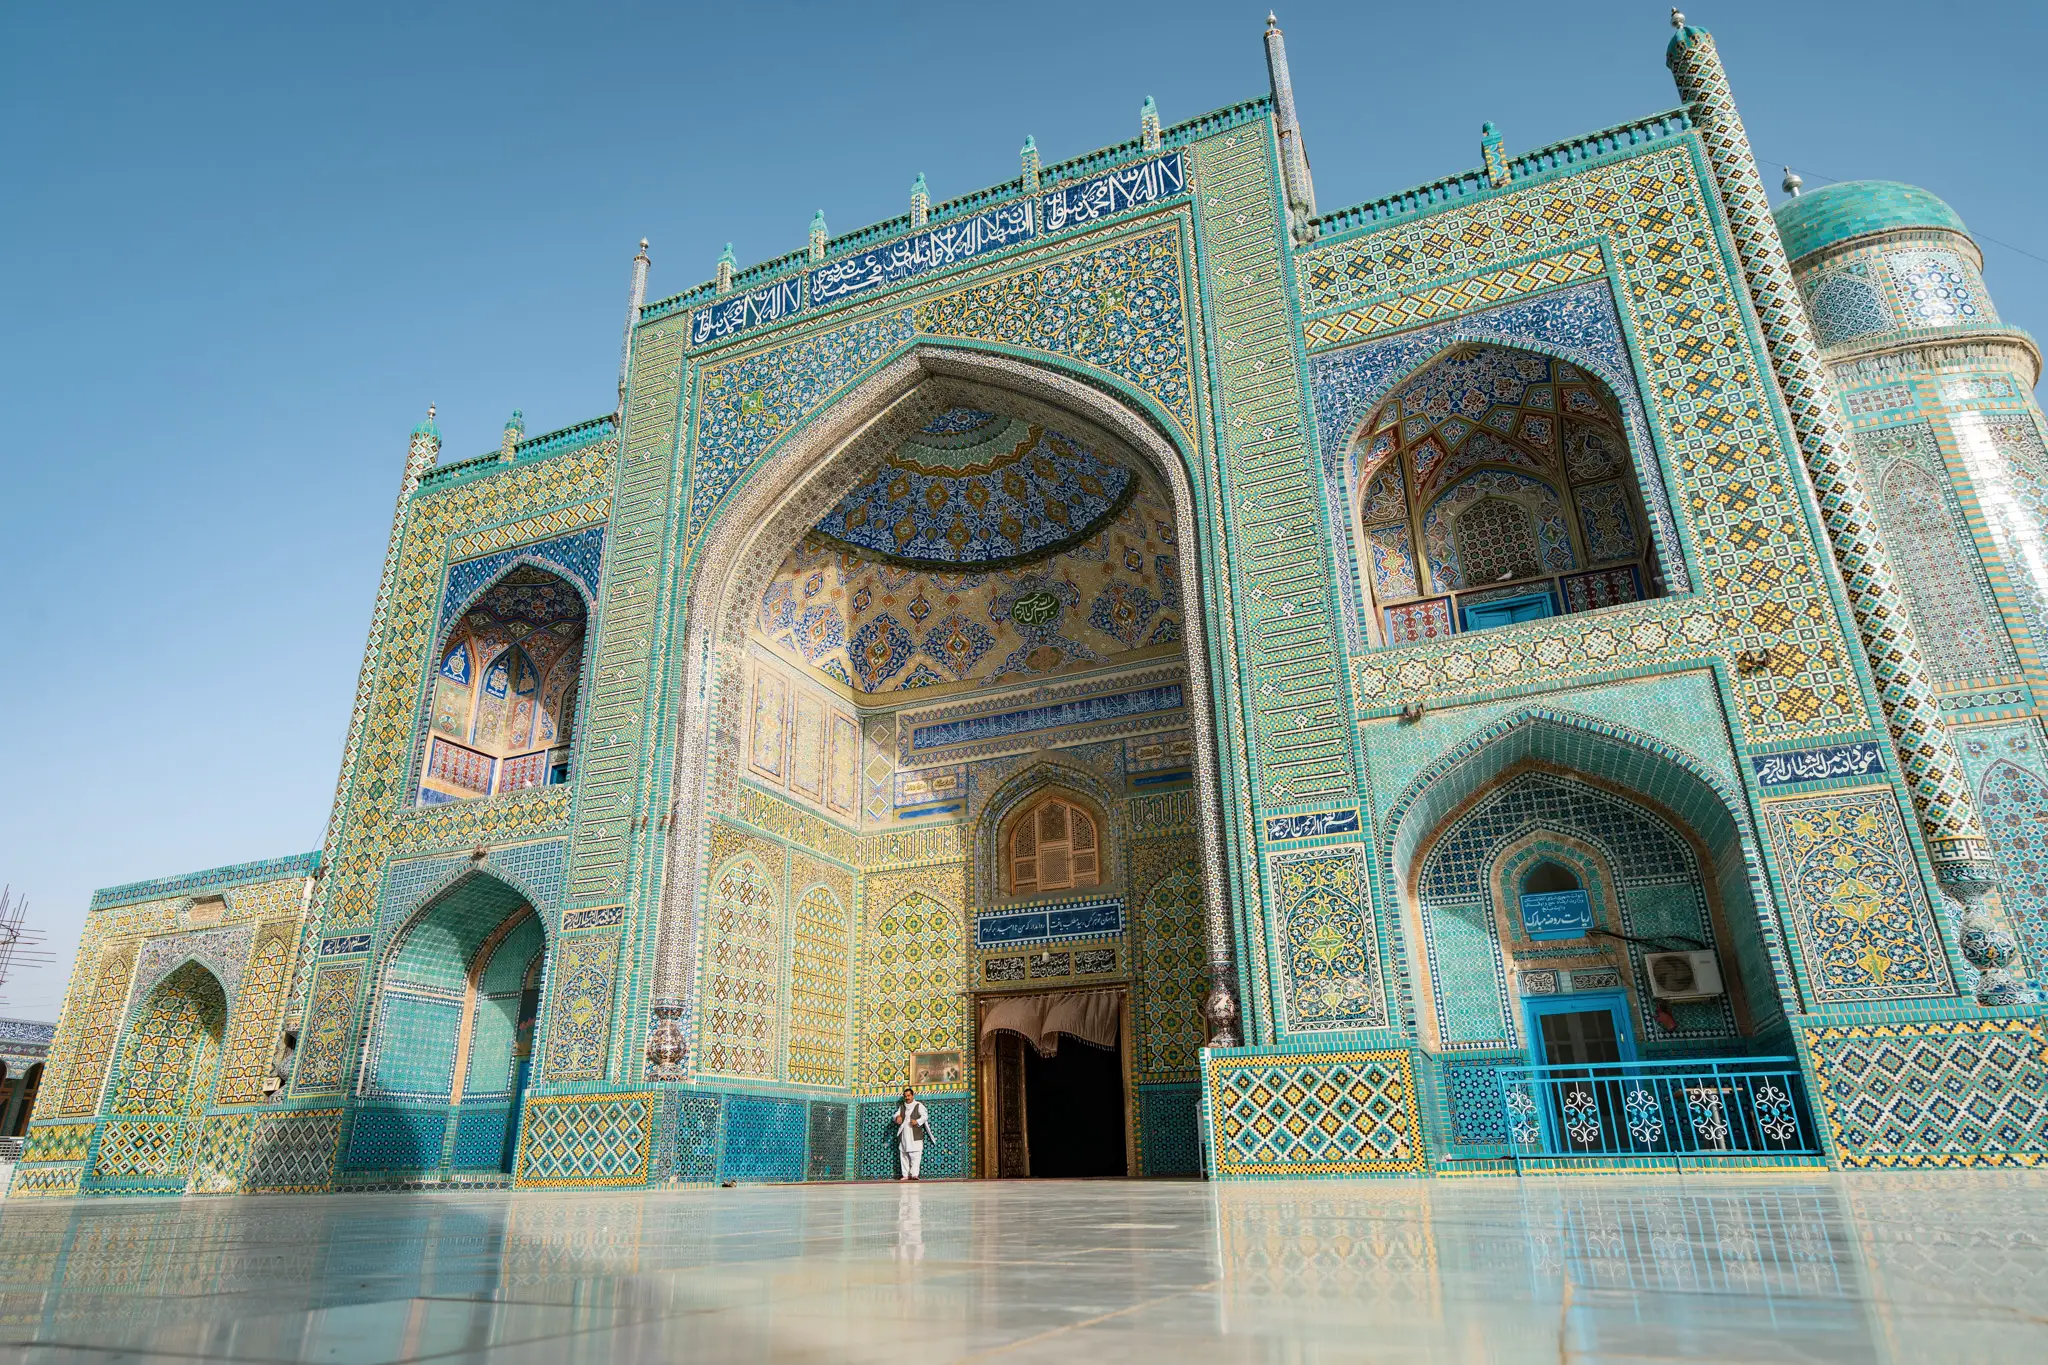 The Shrine of Hazrat Ali in Mazar-e-Sharif